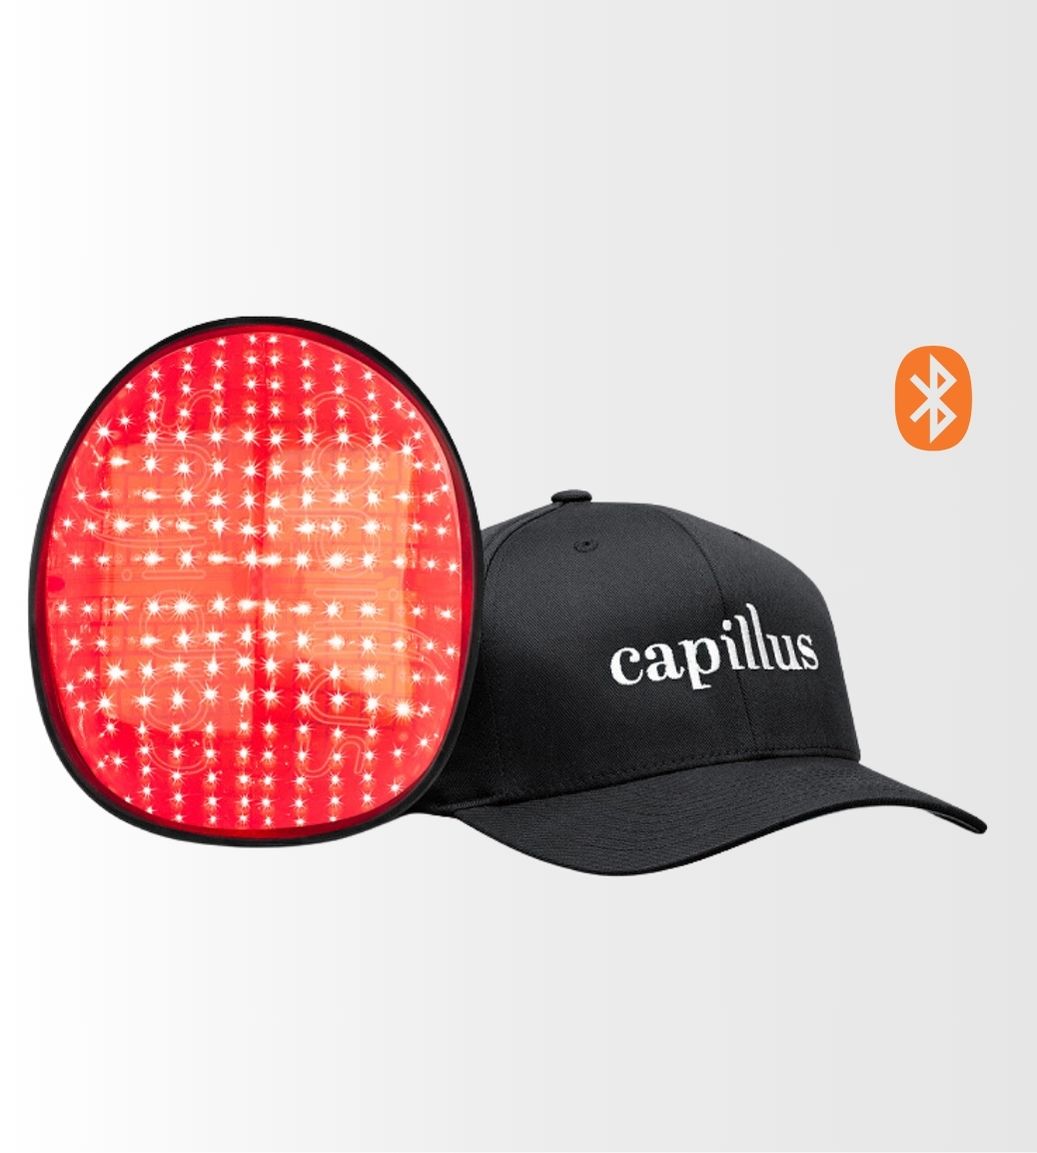 Capillus One S | 128 laser - Bluetooth